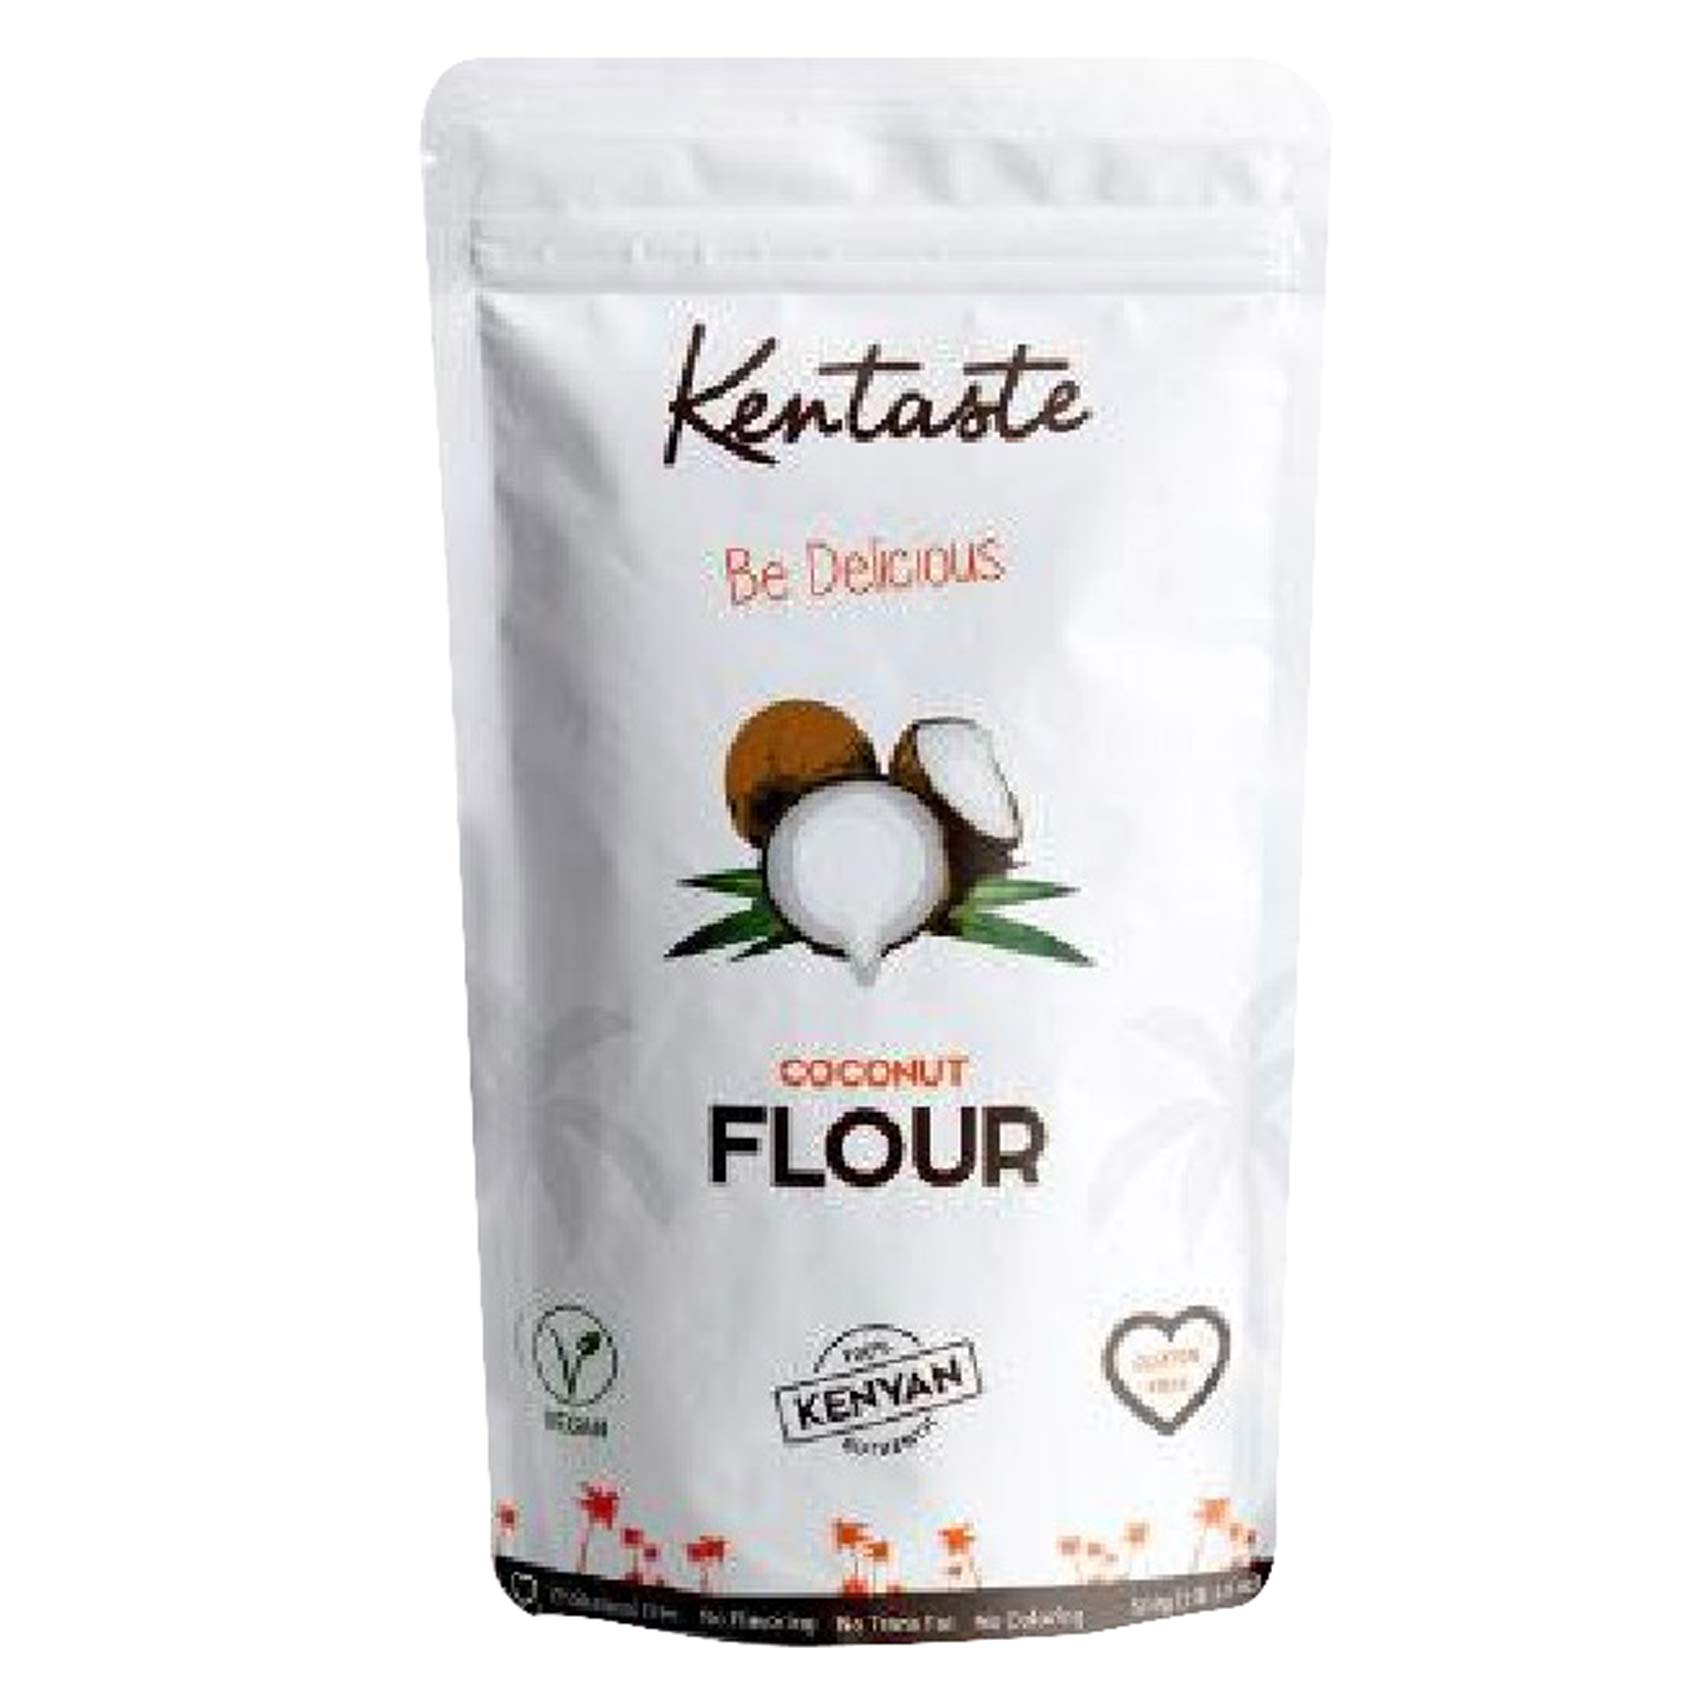 Kentaste Coconut Flour 500g